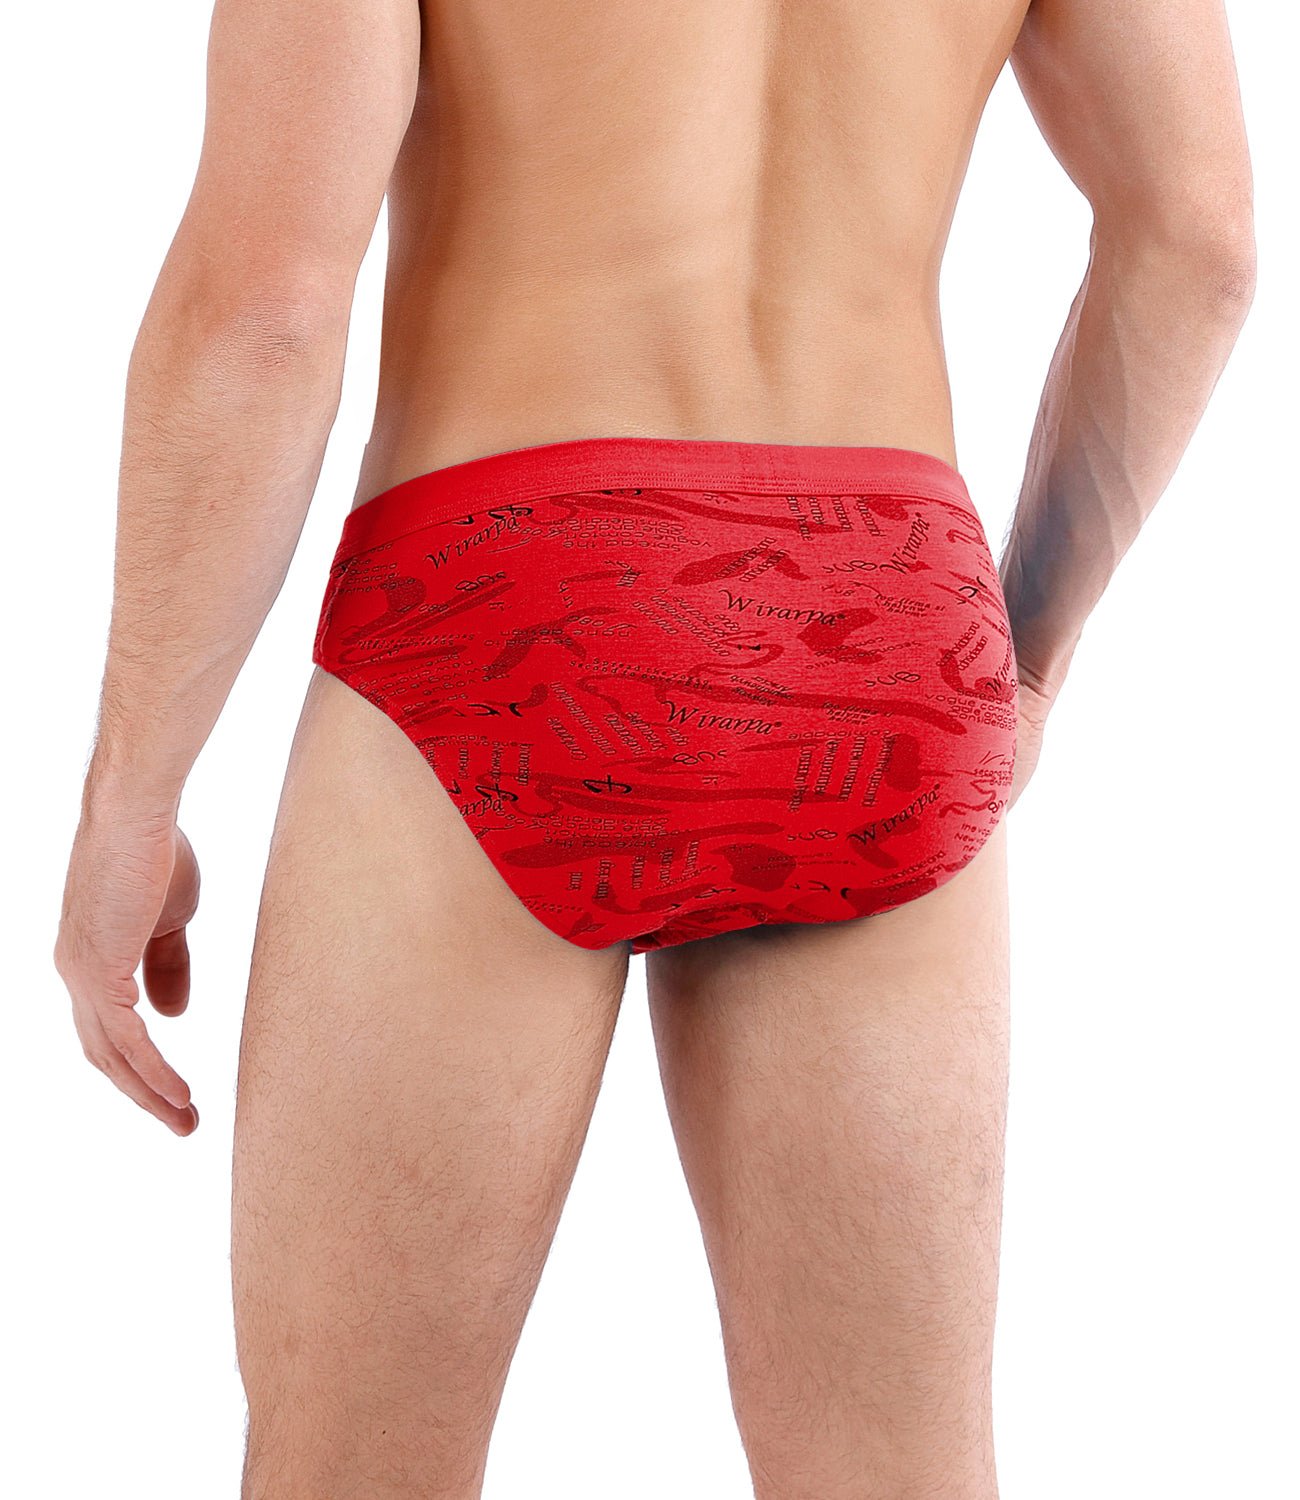 wirarpa Men's Underwear Modal Microfiber Briefs No Fly Covered Waistband ,  Small